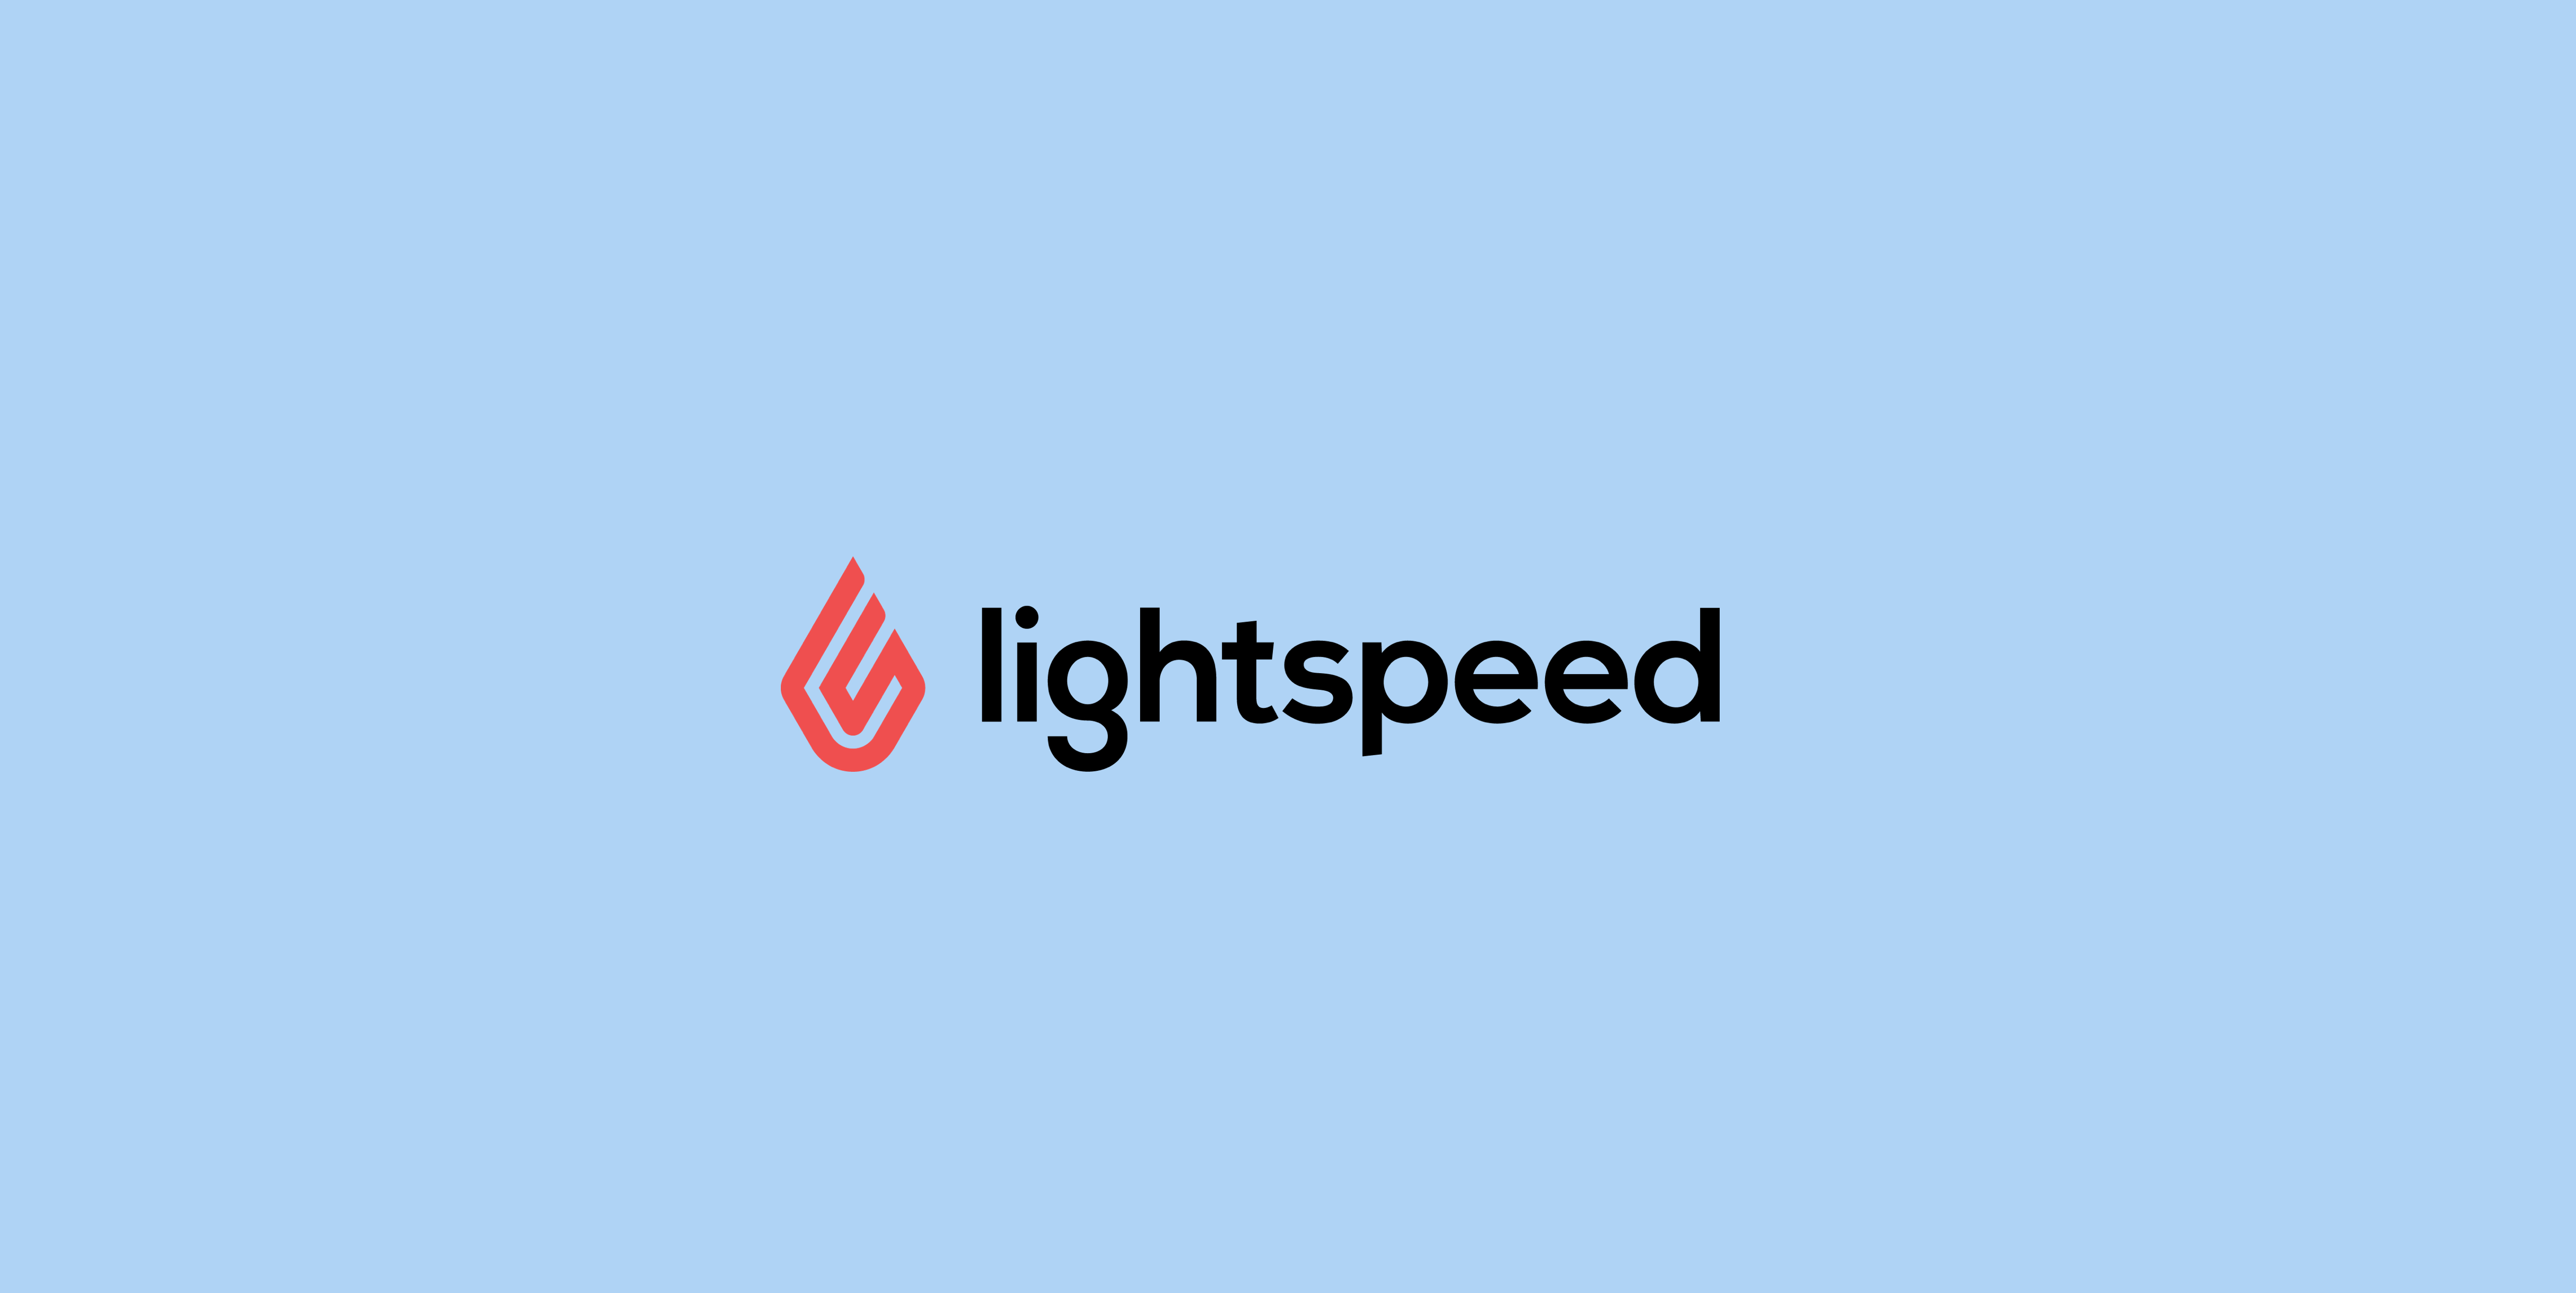 lightspeed customer service